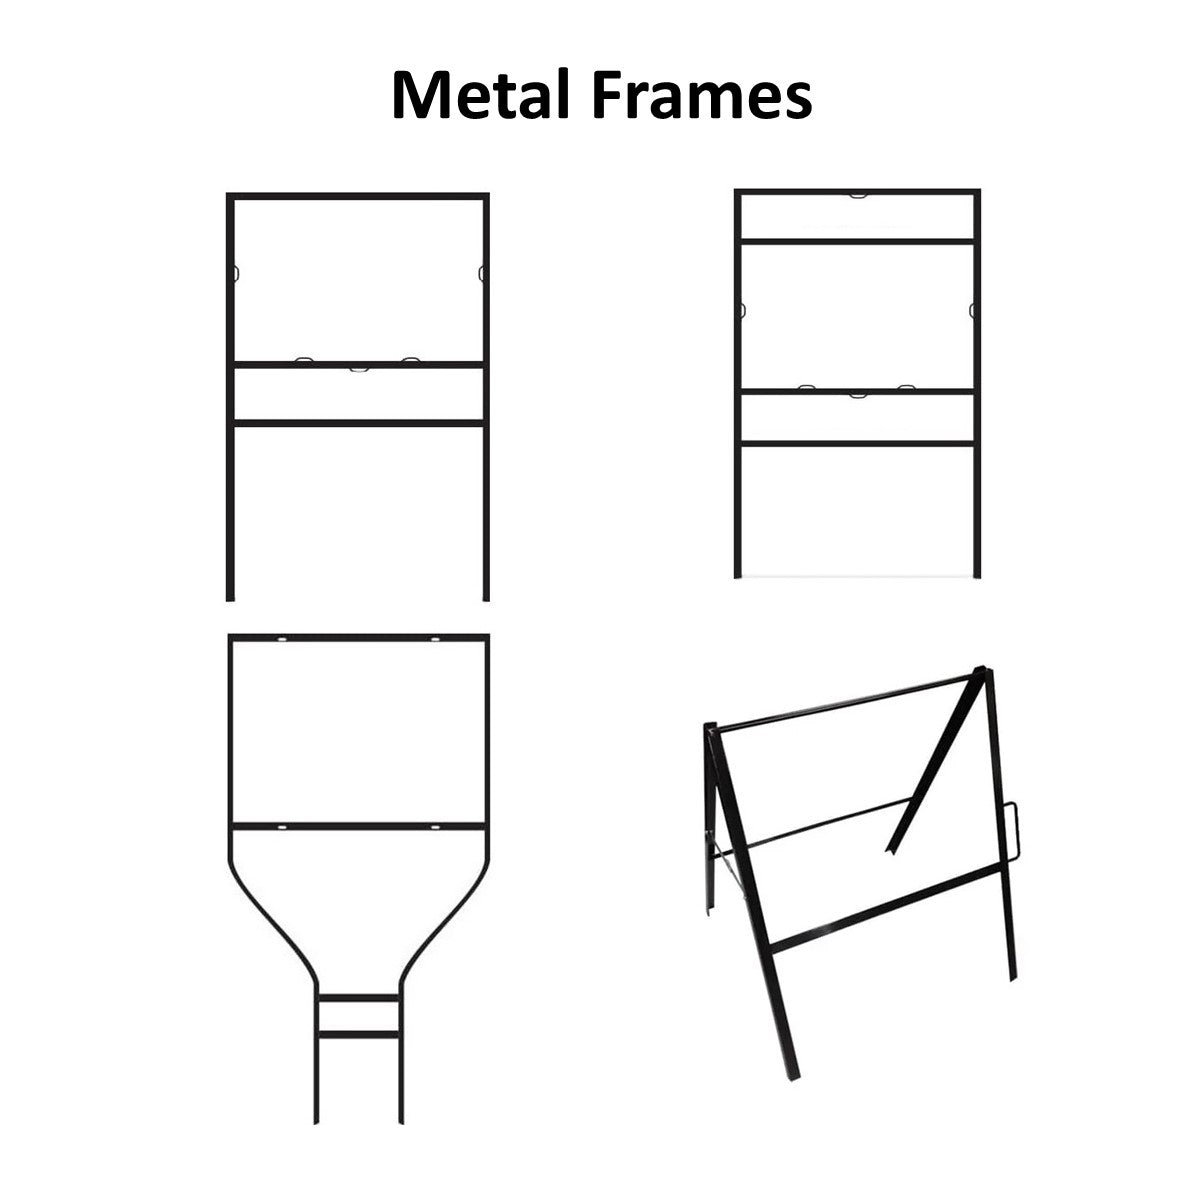 Metal Frames